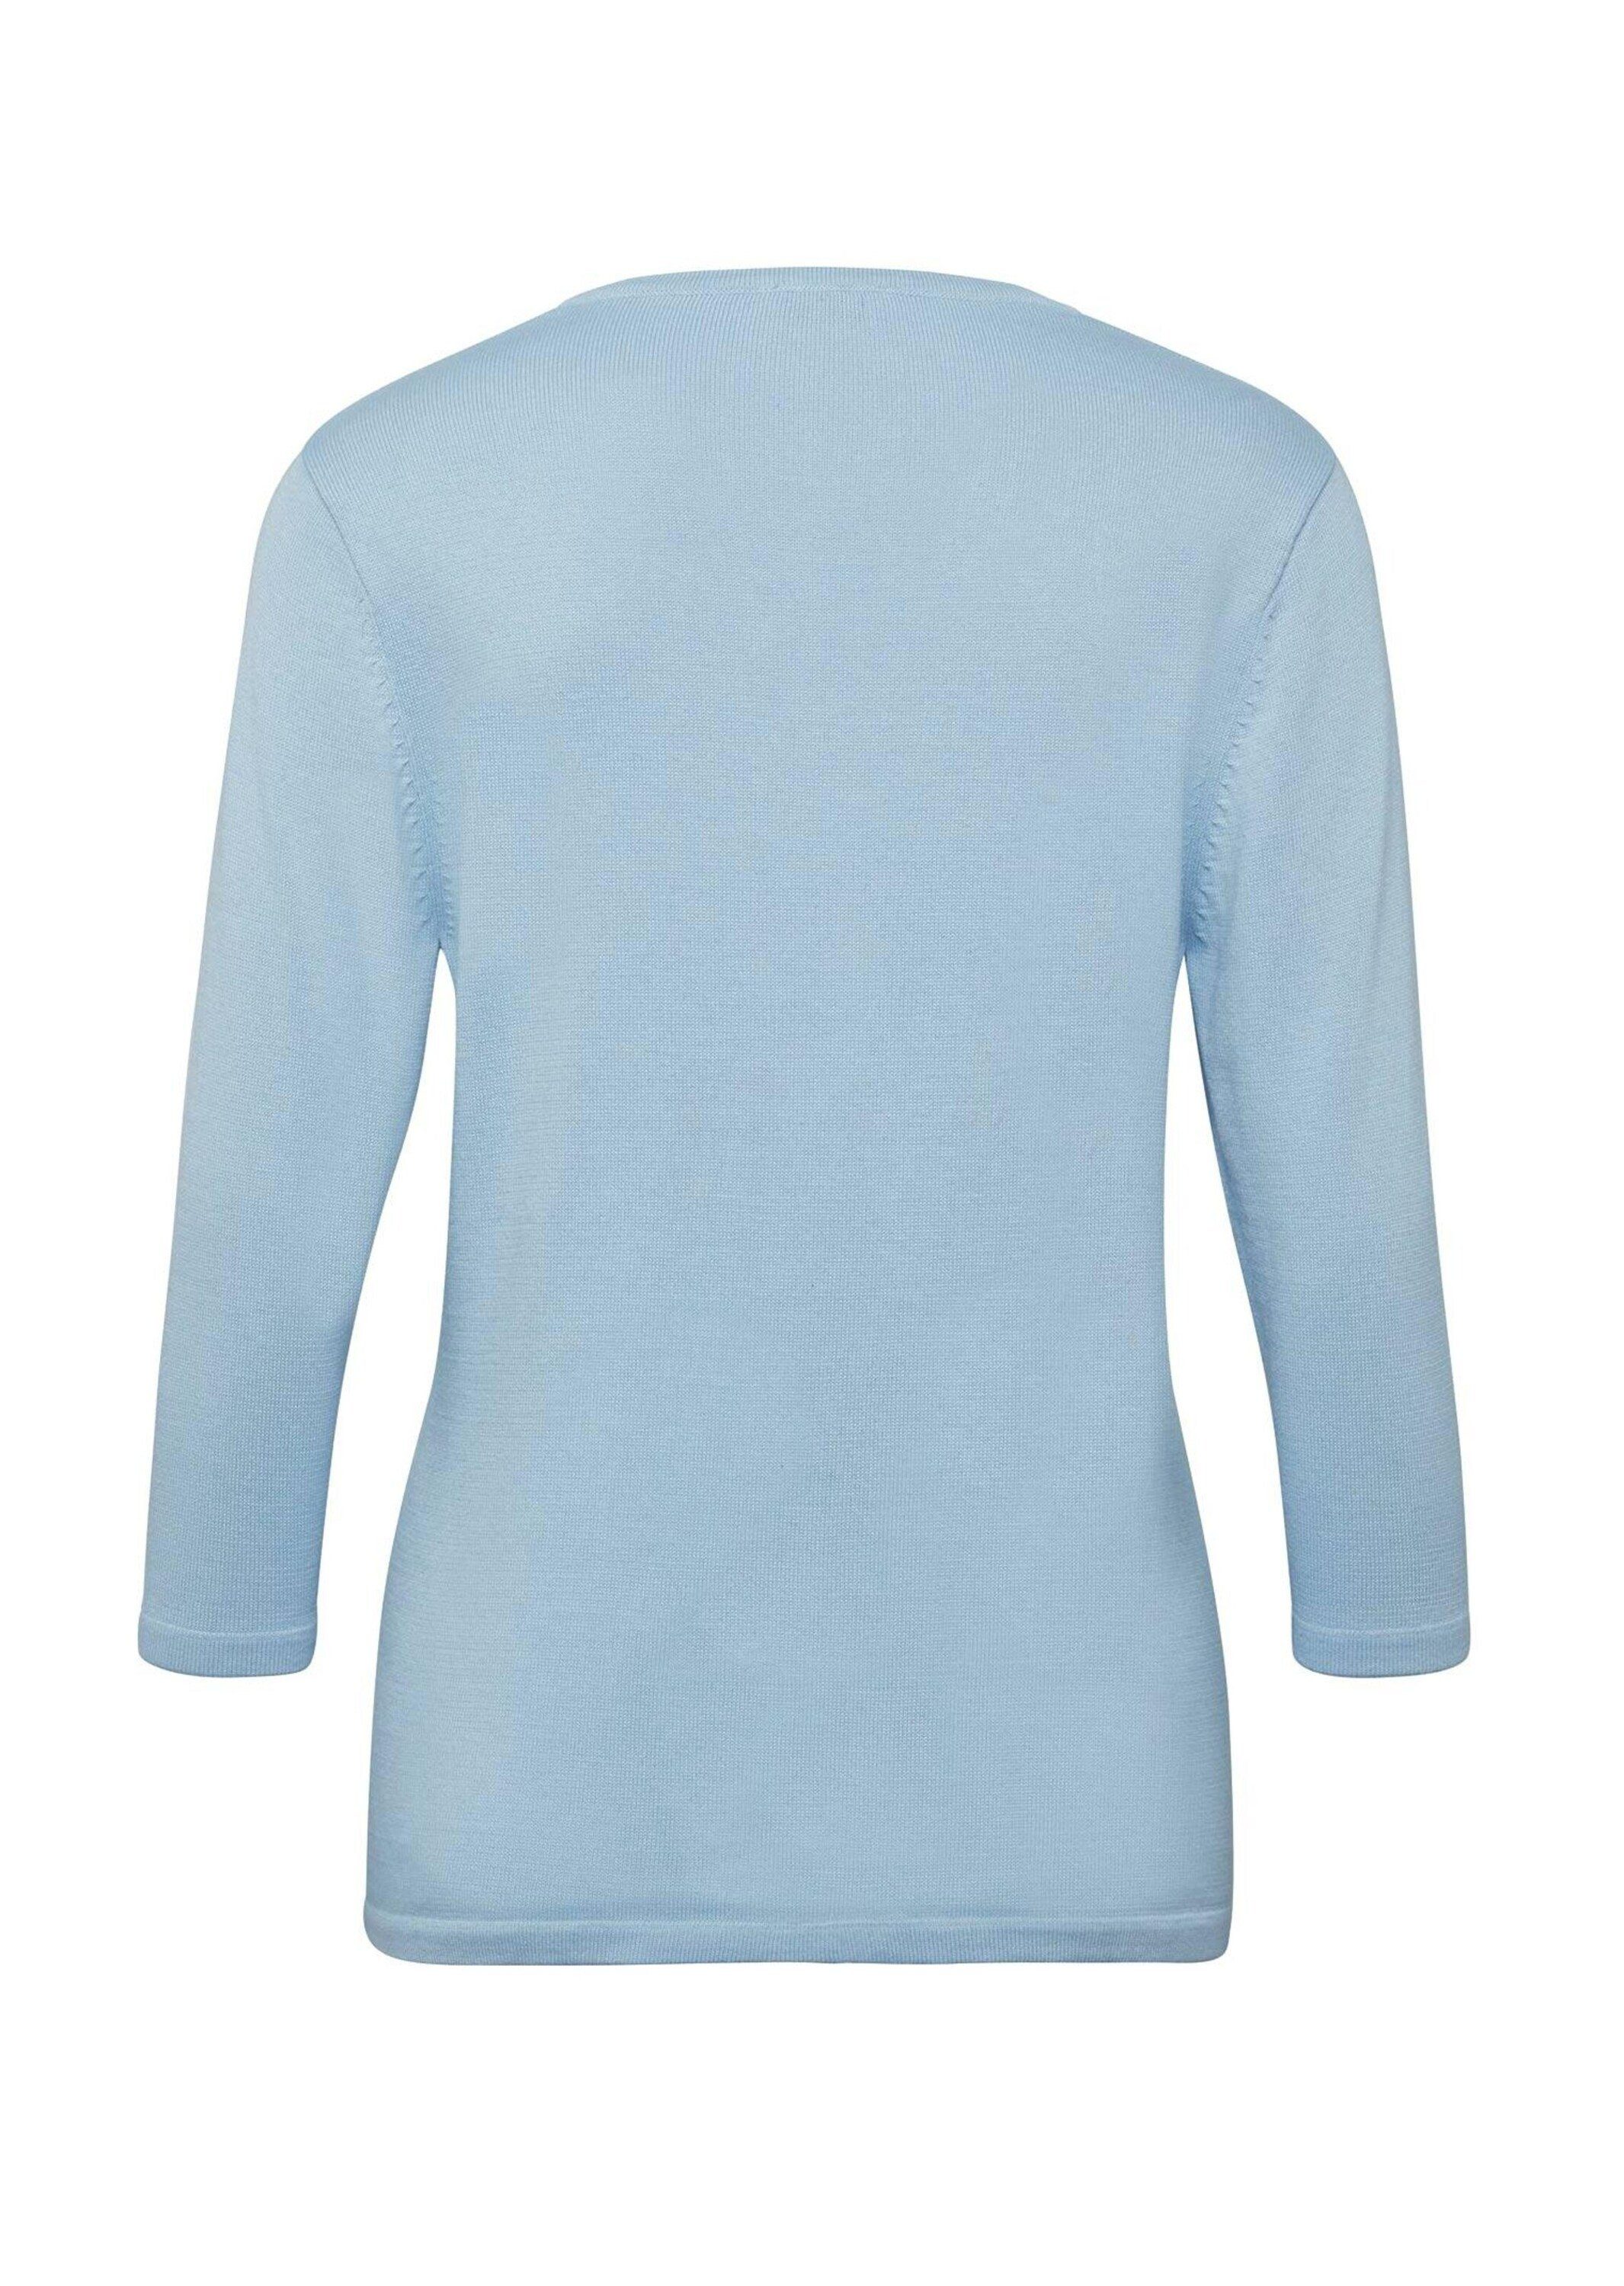 GOLDNER Strickpullover Pullover in himmelblau hochwertiger Qualität